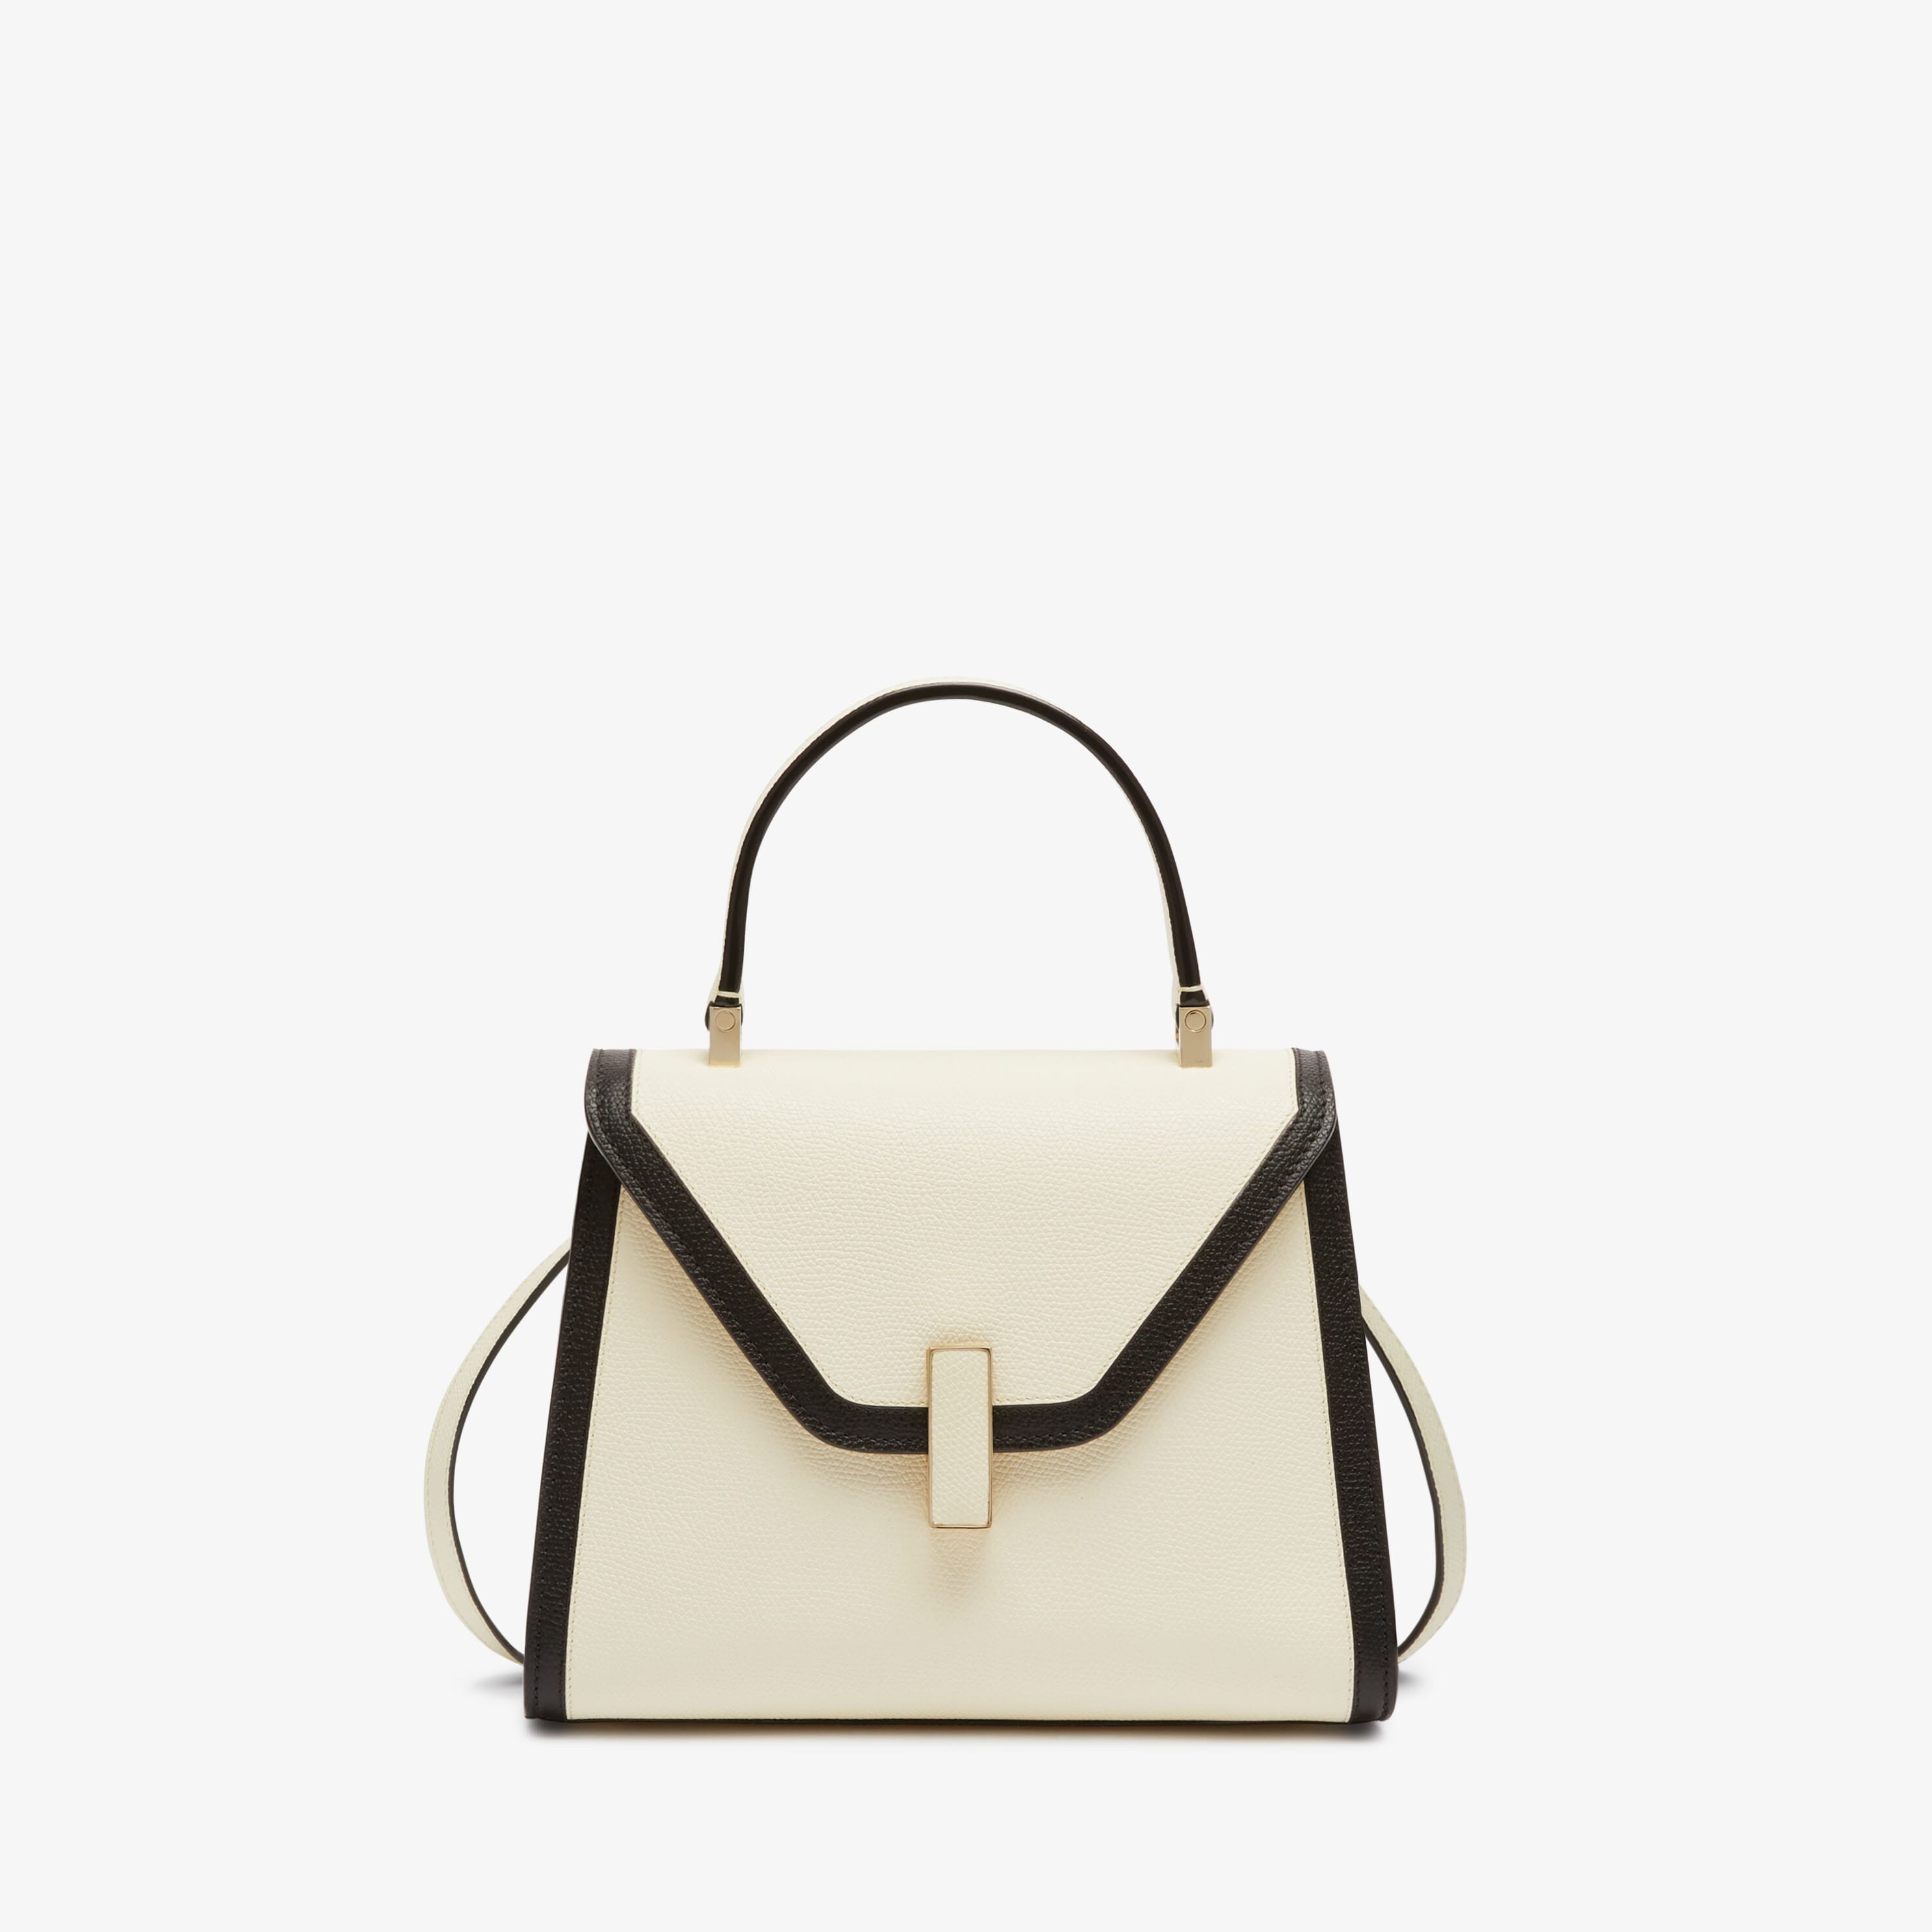 Iside top handle handbags, evening bags, backpacks | Valextra